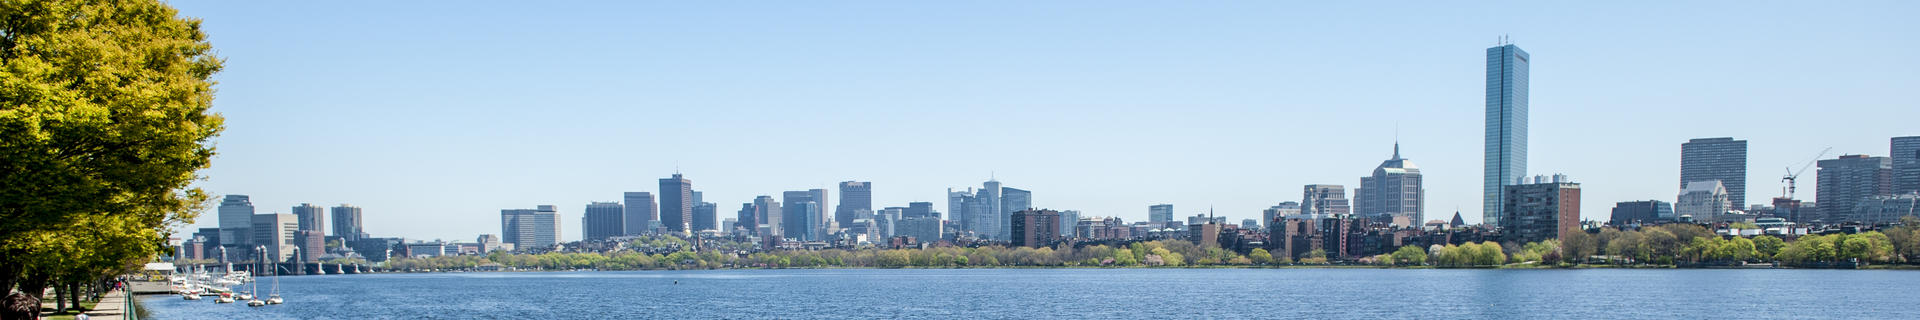 Panoramic skyline of Boston